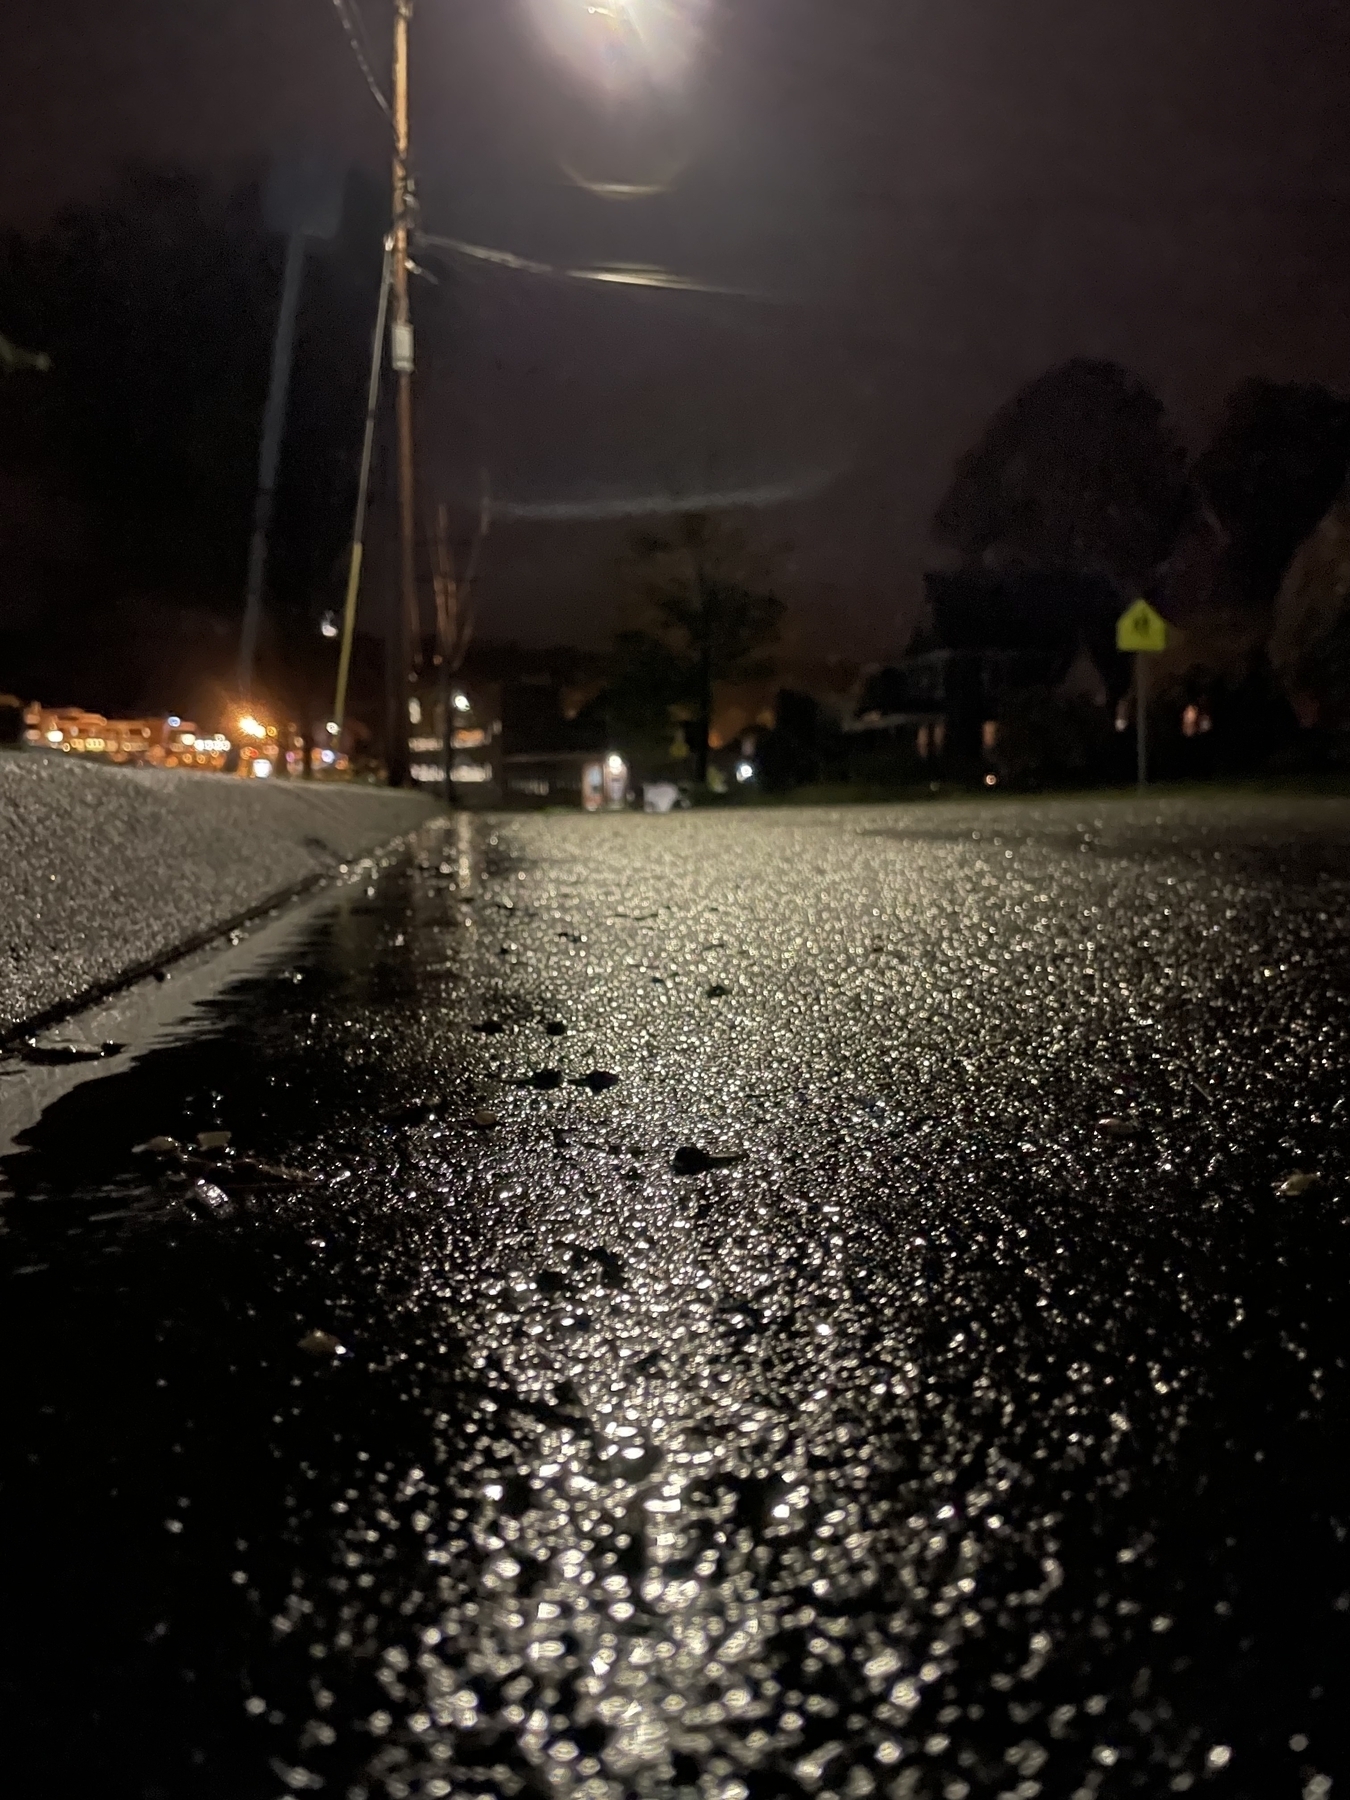 Wet pavement on Sanderson St. at night